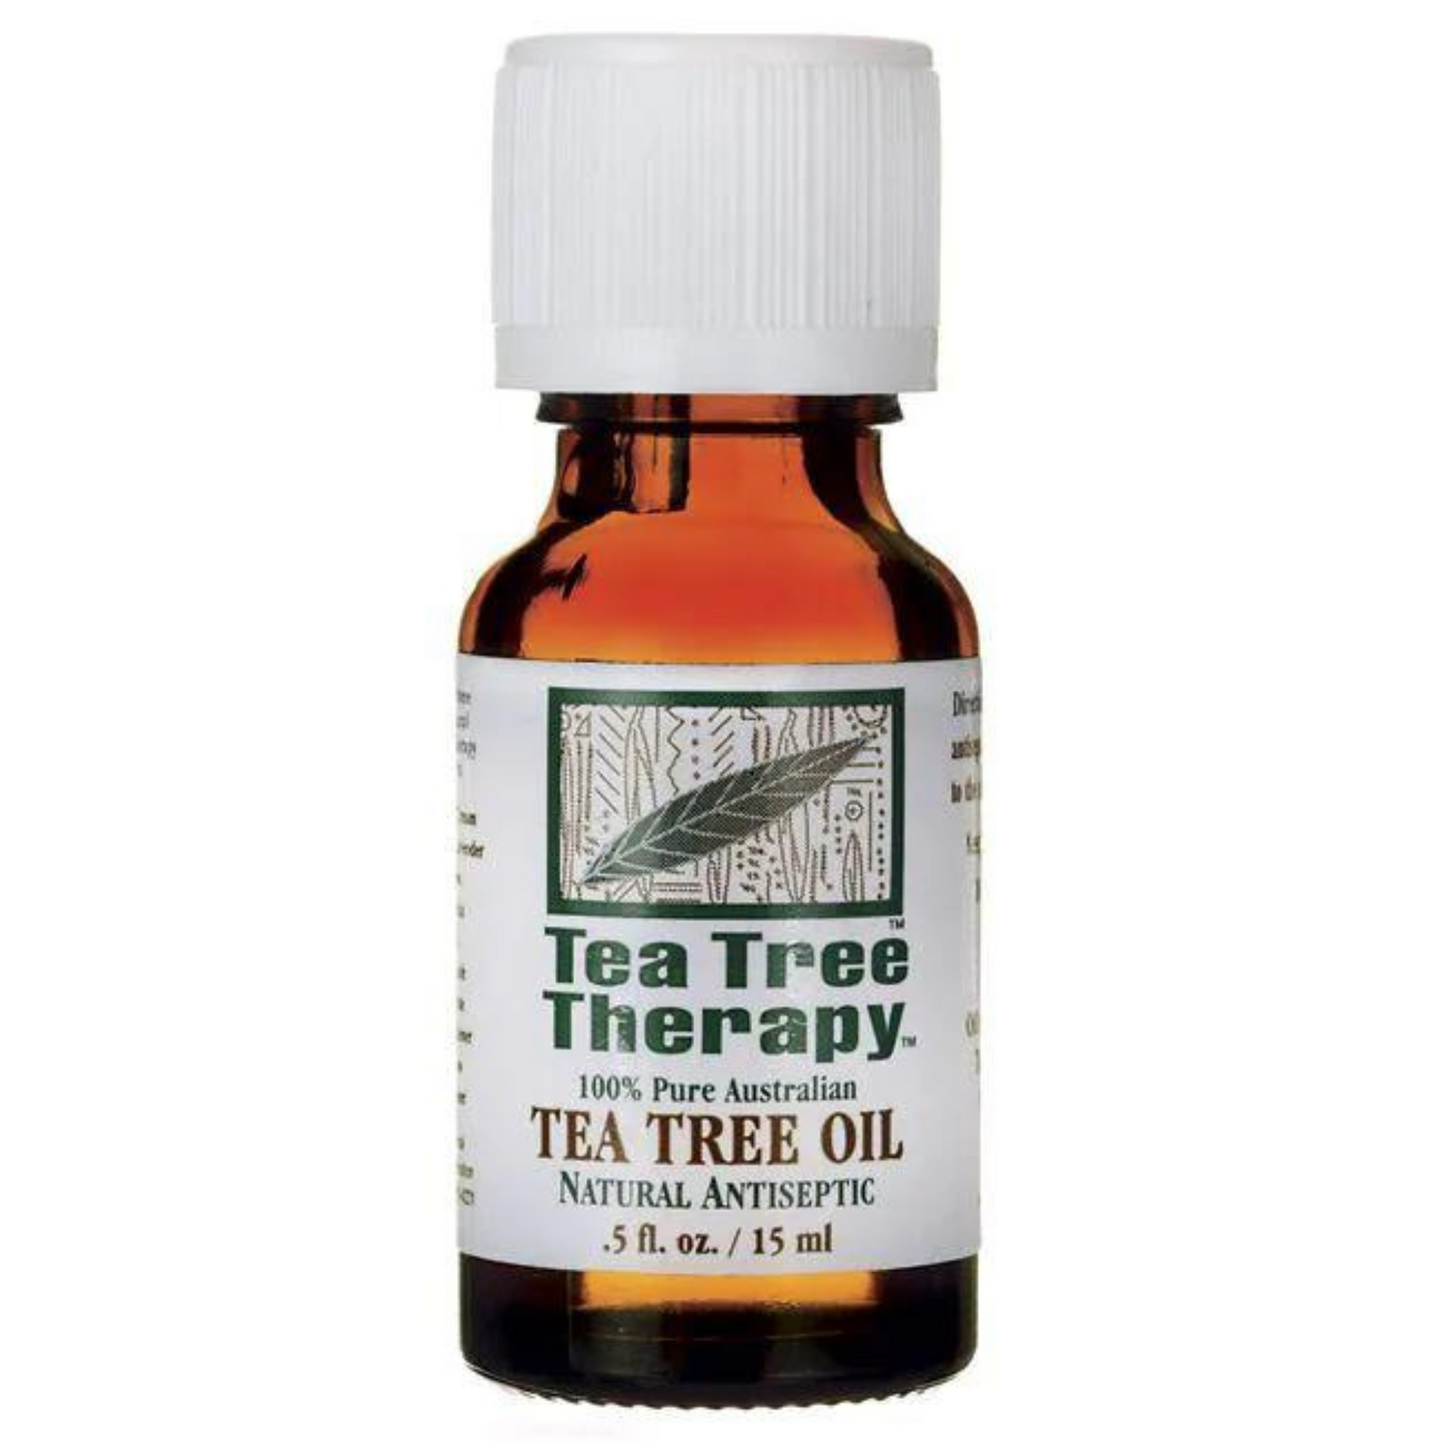 Primary Image of Tea Tree Therapy Tea Tree Oil (0.5 fl oz) 